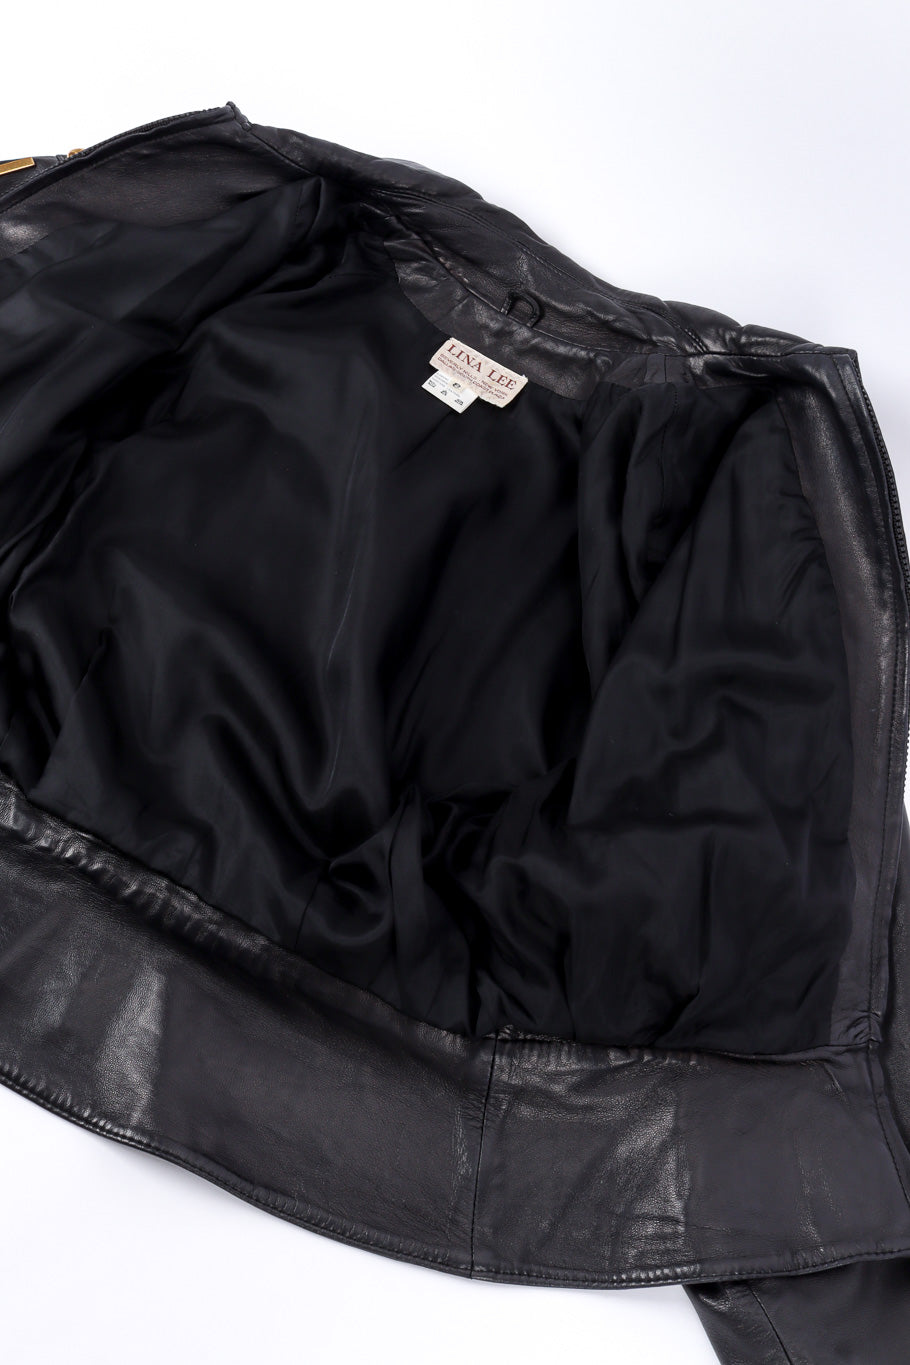 Vintage Lina Lee Studded Leather Jacket view of lining @recessla